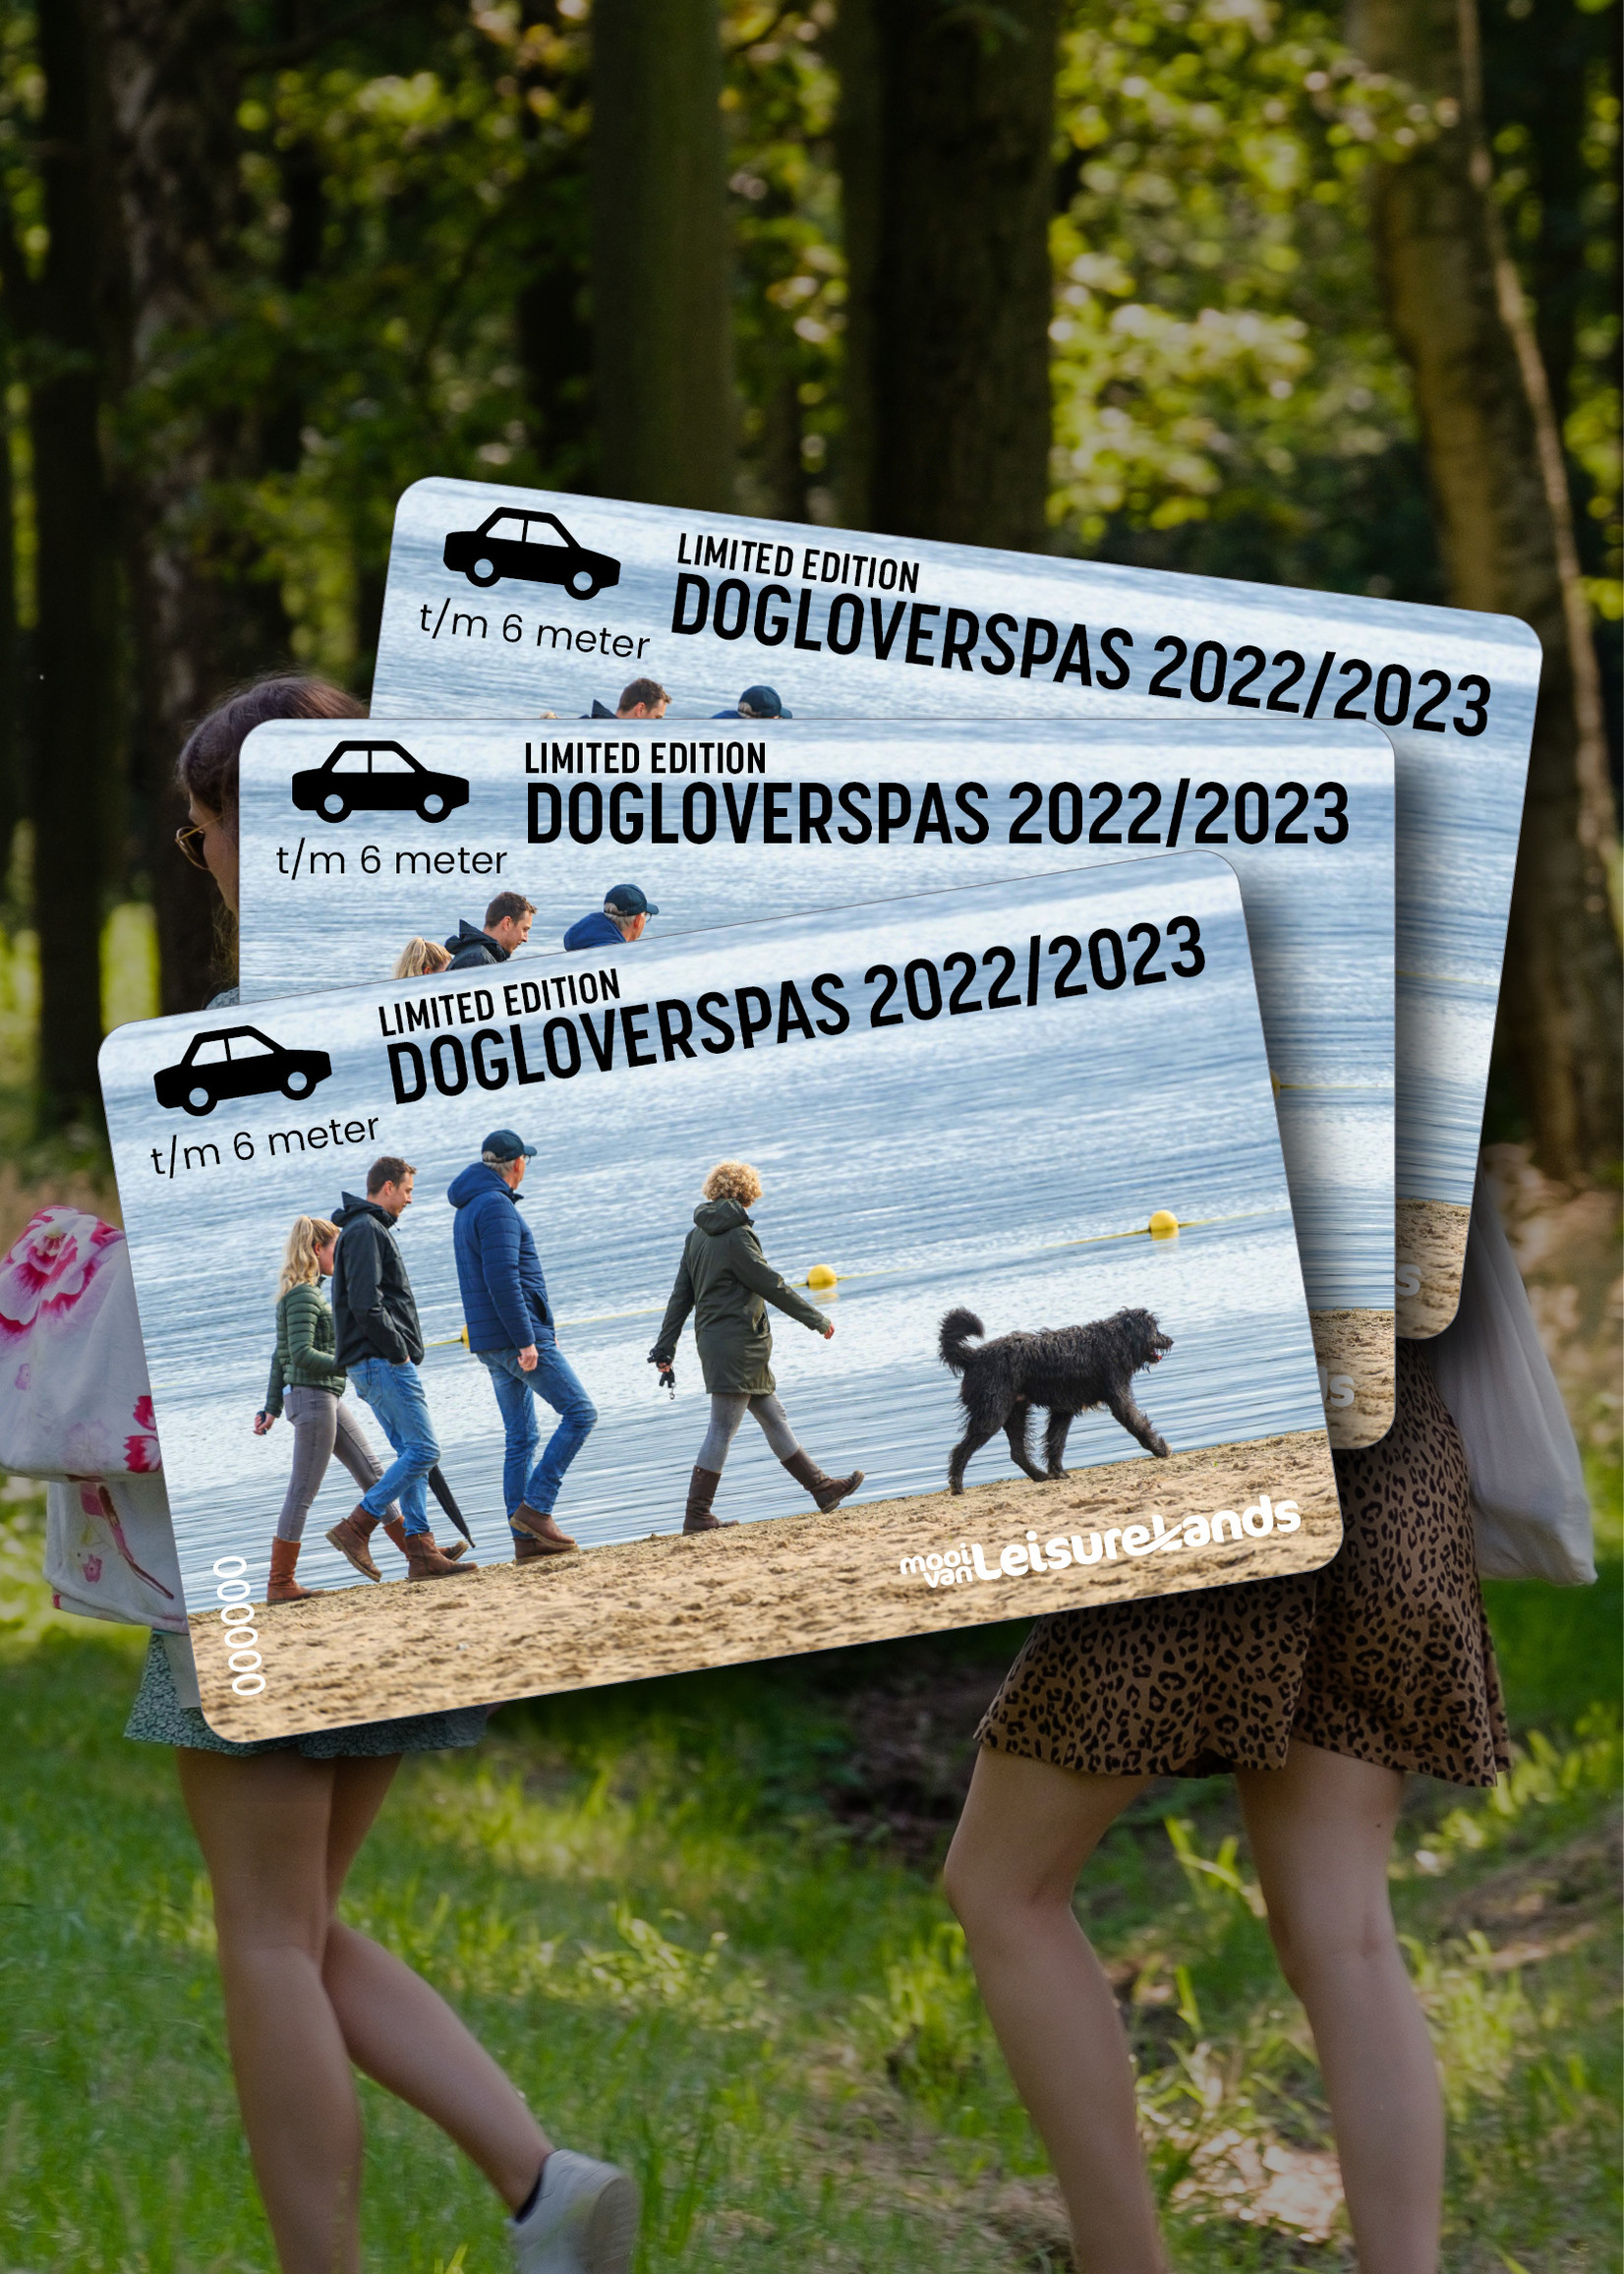 Dogloverspas (kurzes Fahrzeug) 2022/2023